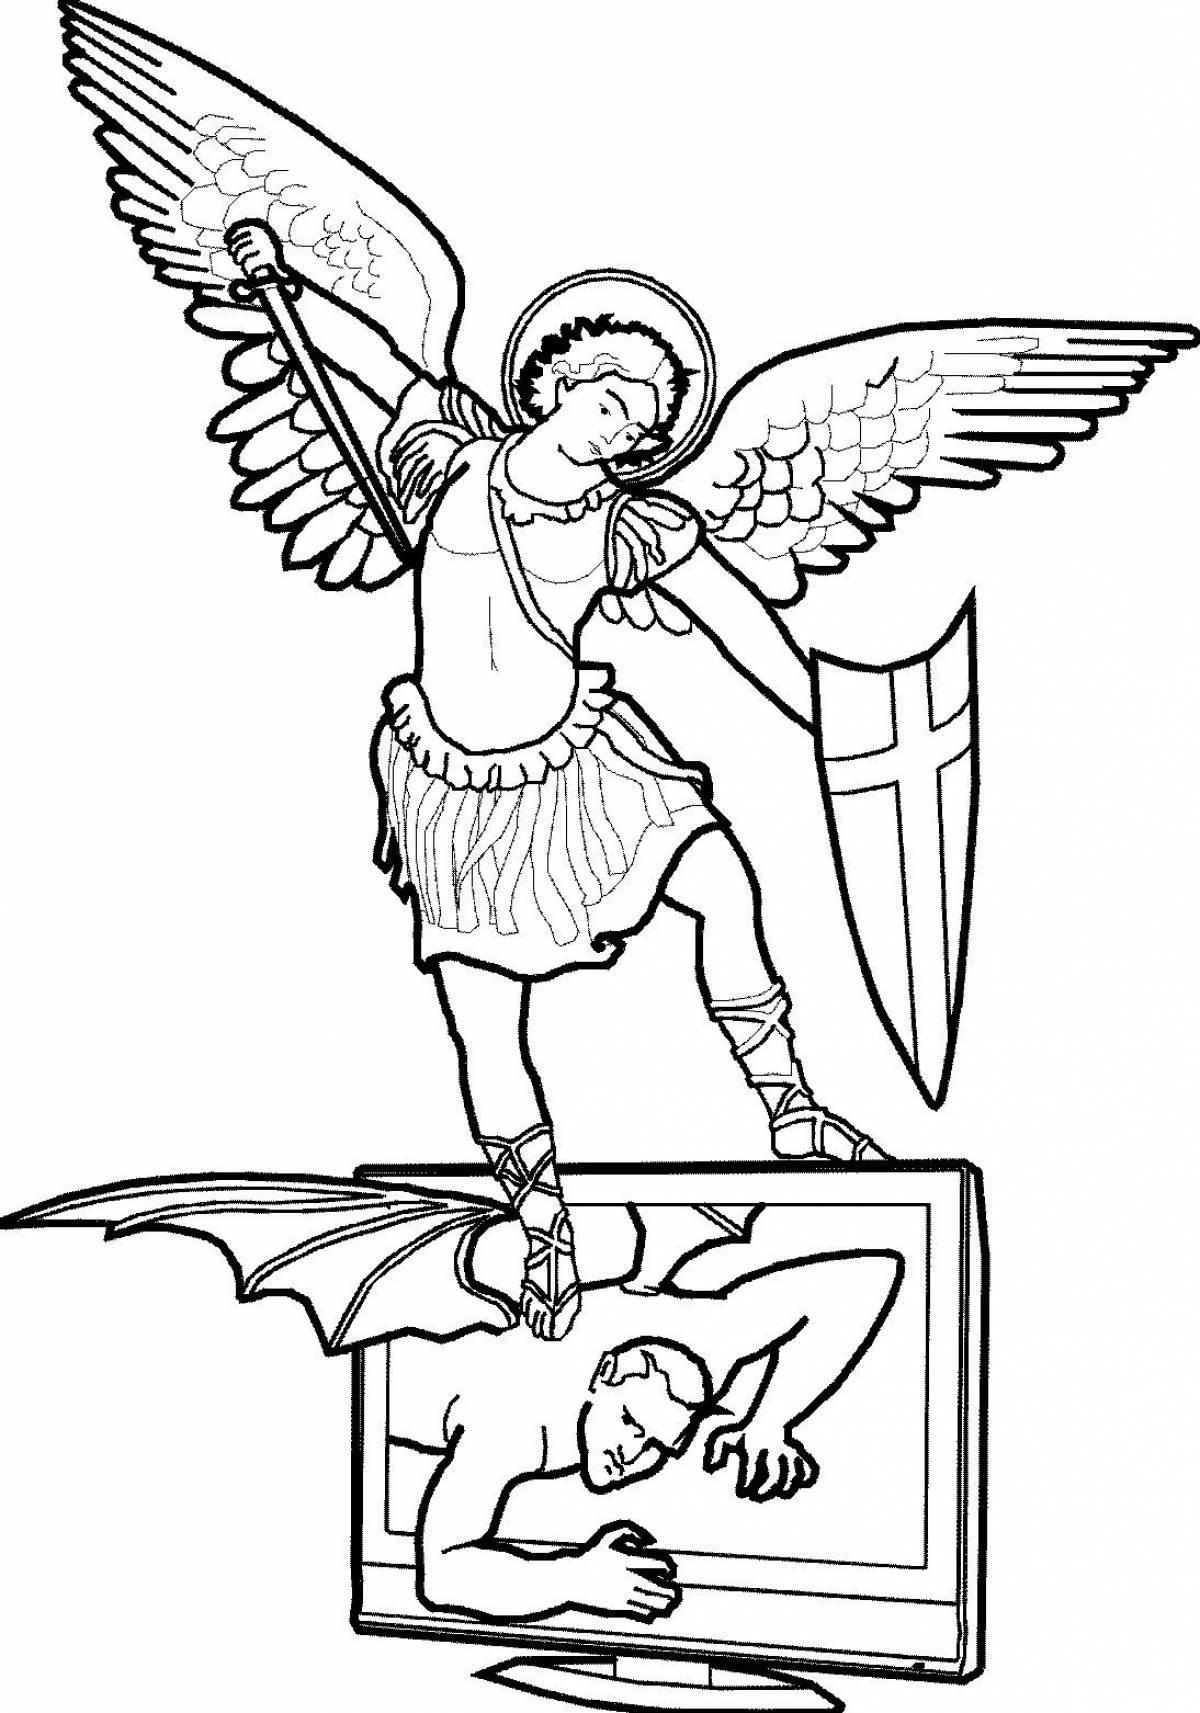 Coloring book magnificent archangel michael